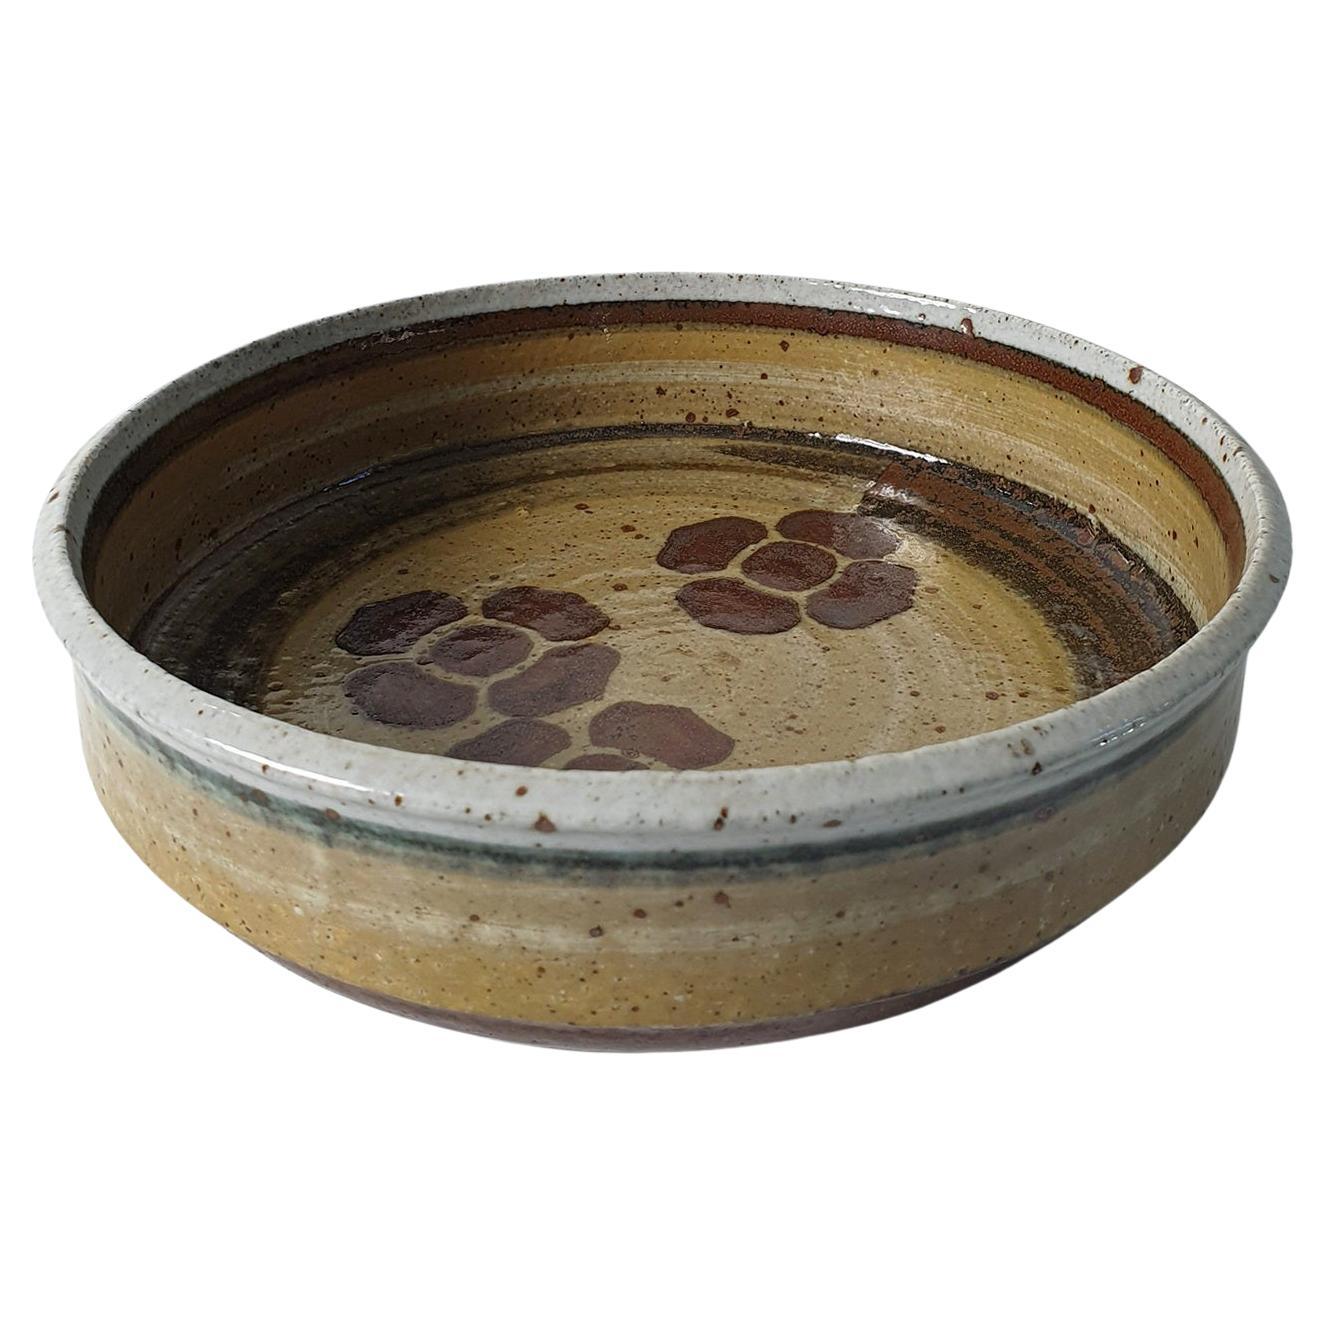 Boho Chic Ceramic Bowl by Drejargruppen for Rörstrand Sweden 1970's For Sale